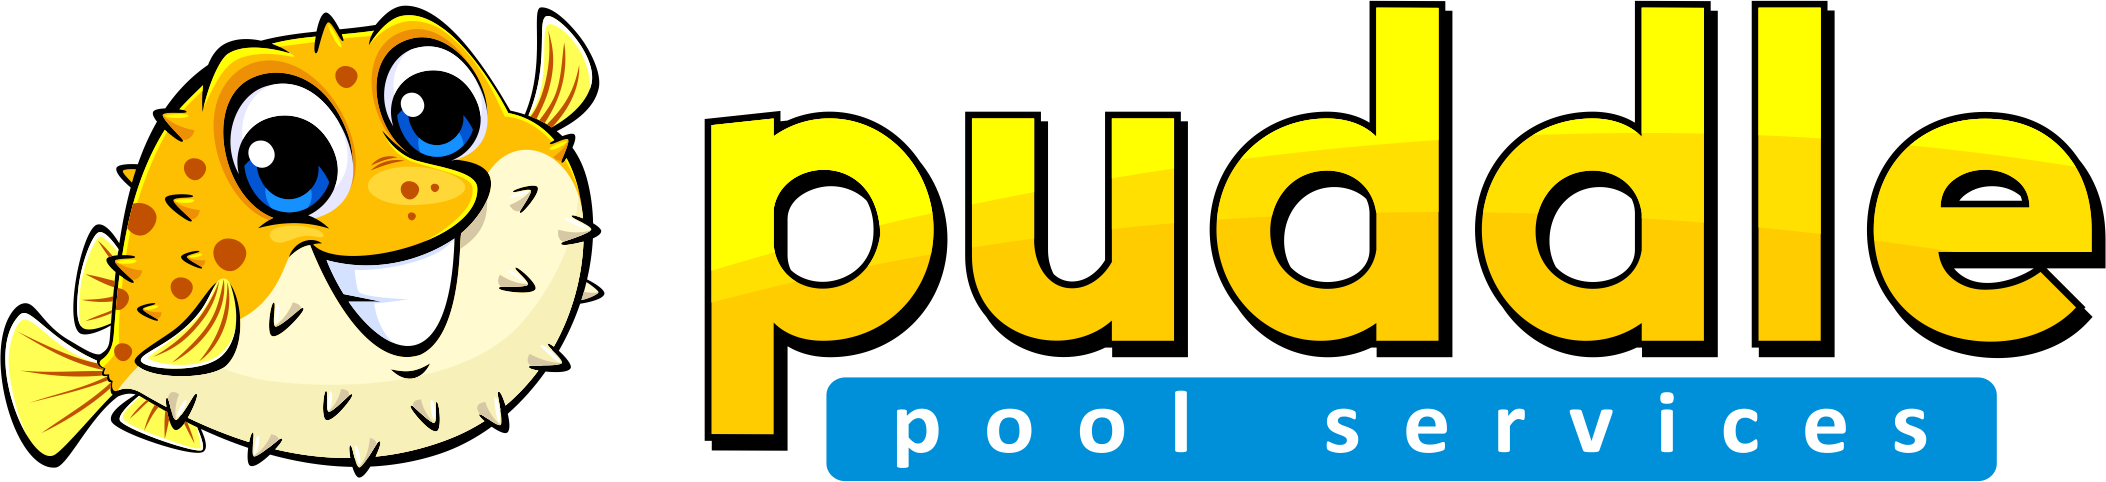 Puddle_Logo_1.png